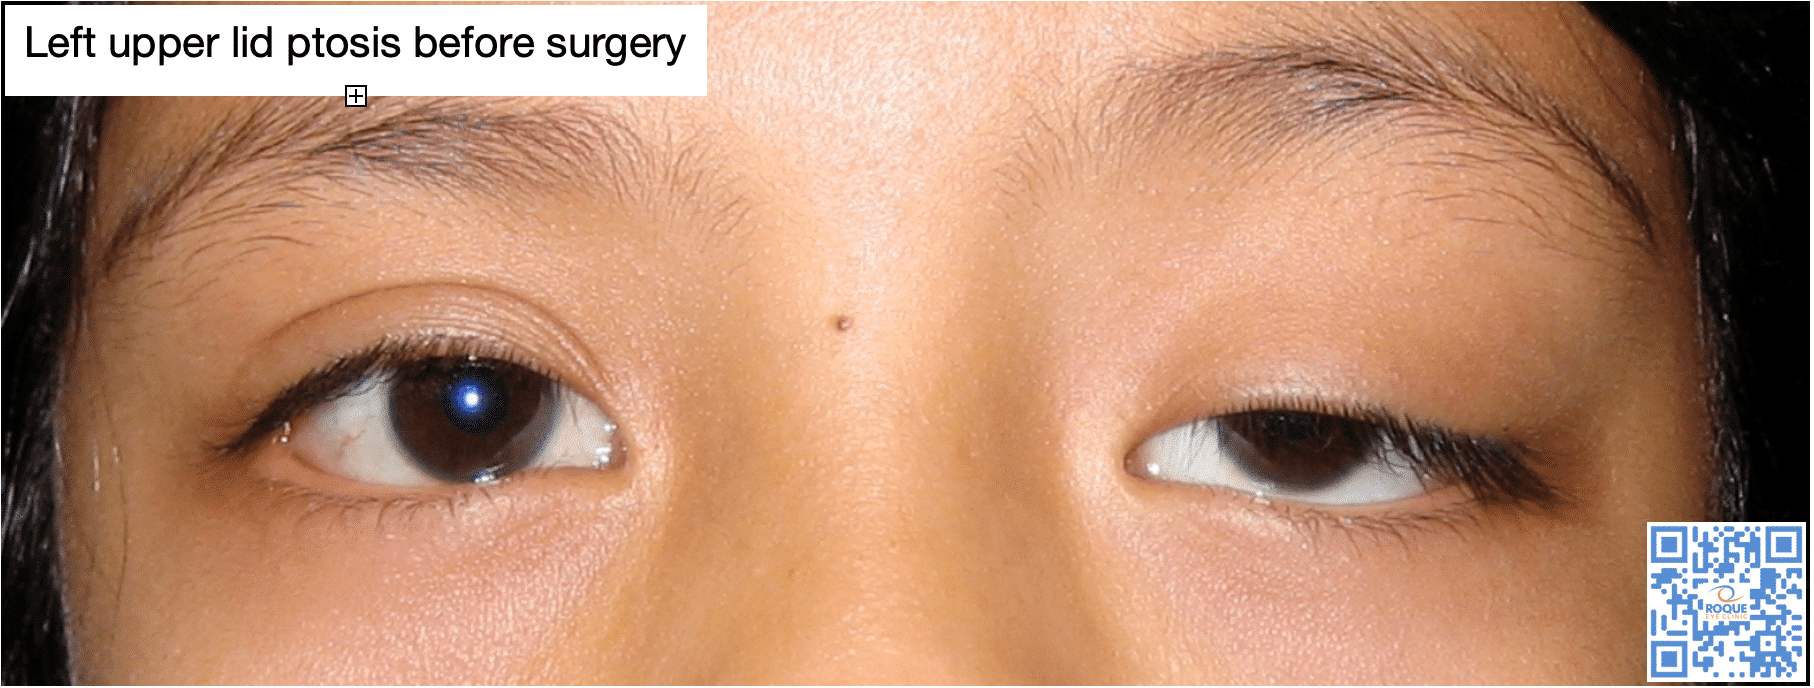 Left upper eyelid ptosis - pre-surgery